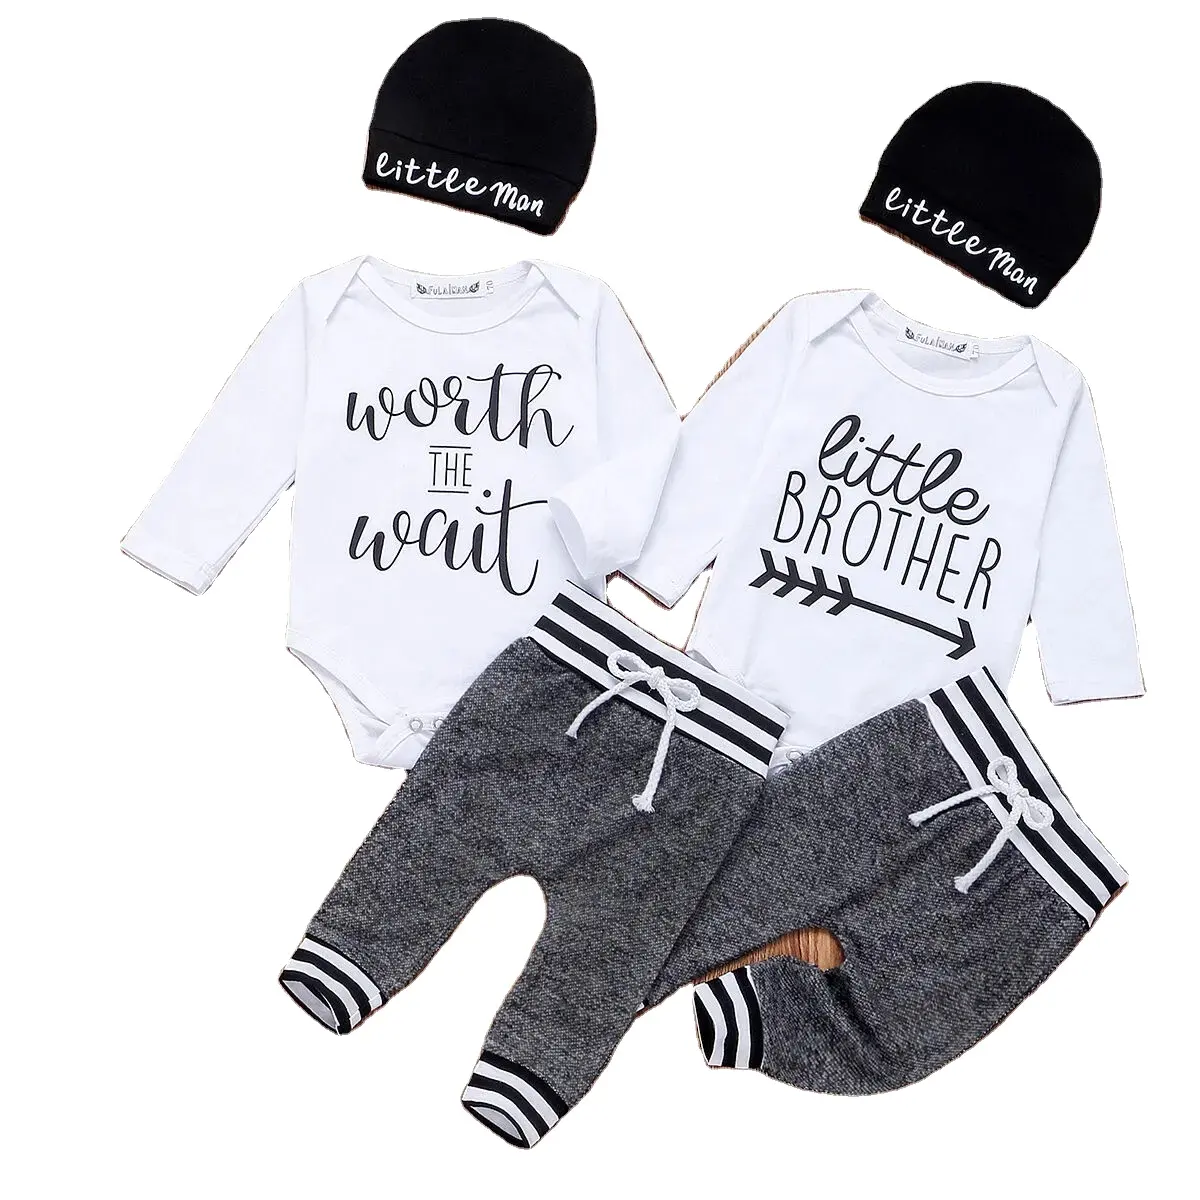 0-18Months Newborn Infant Boy Clothes Cotton Sets Long Sleeve Romper Pant Hats Outfit 3Pcs Baby Warm Clothing